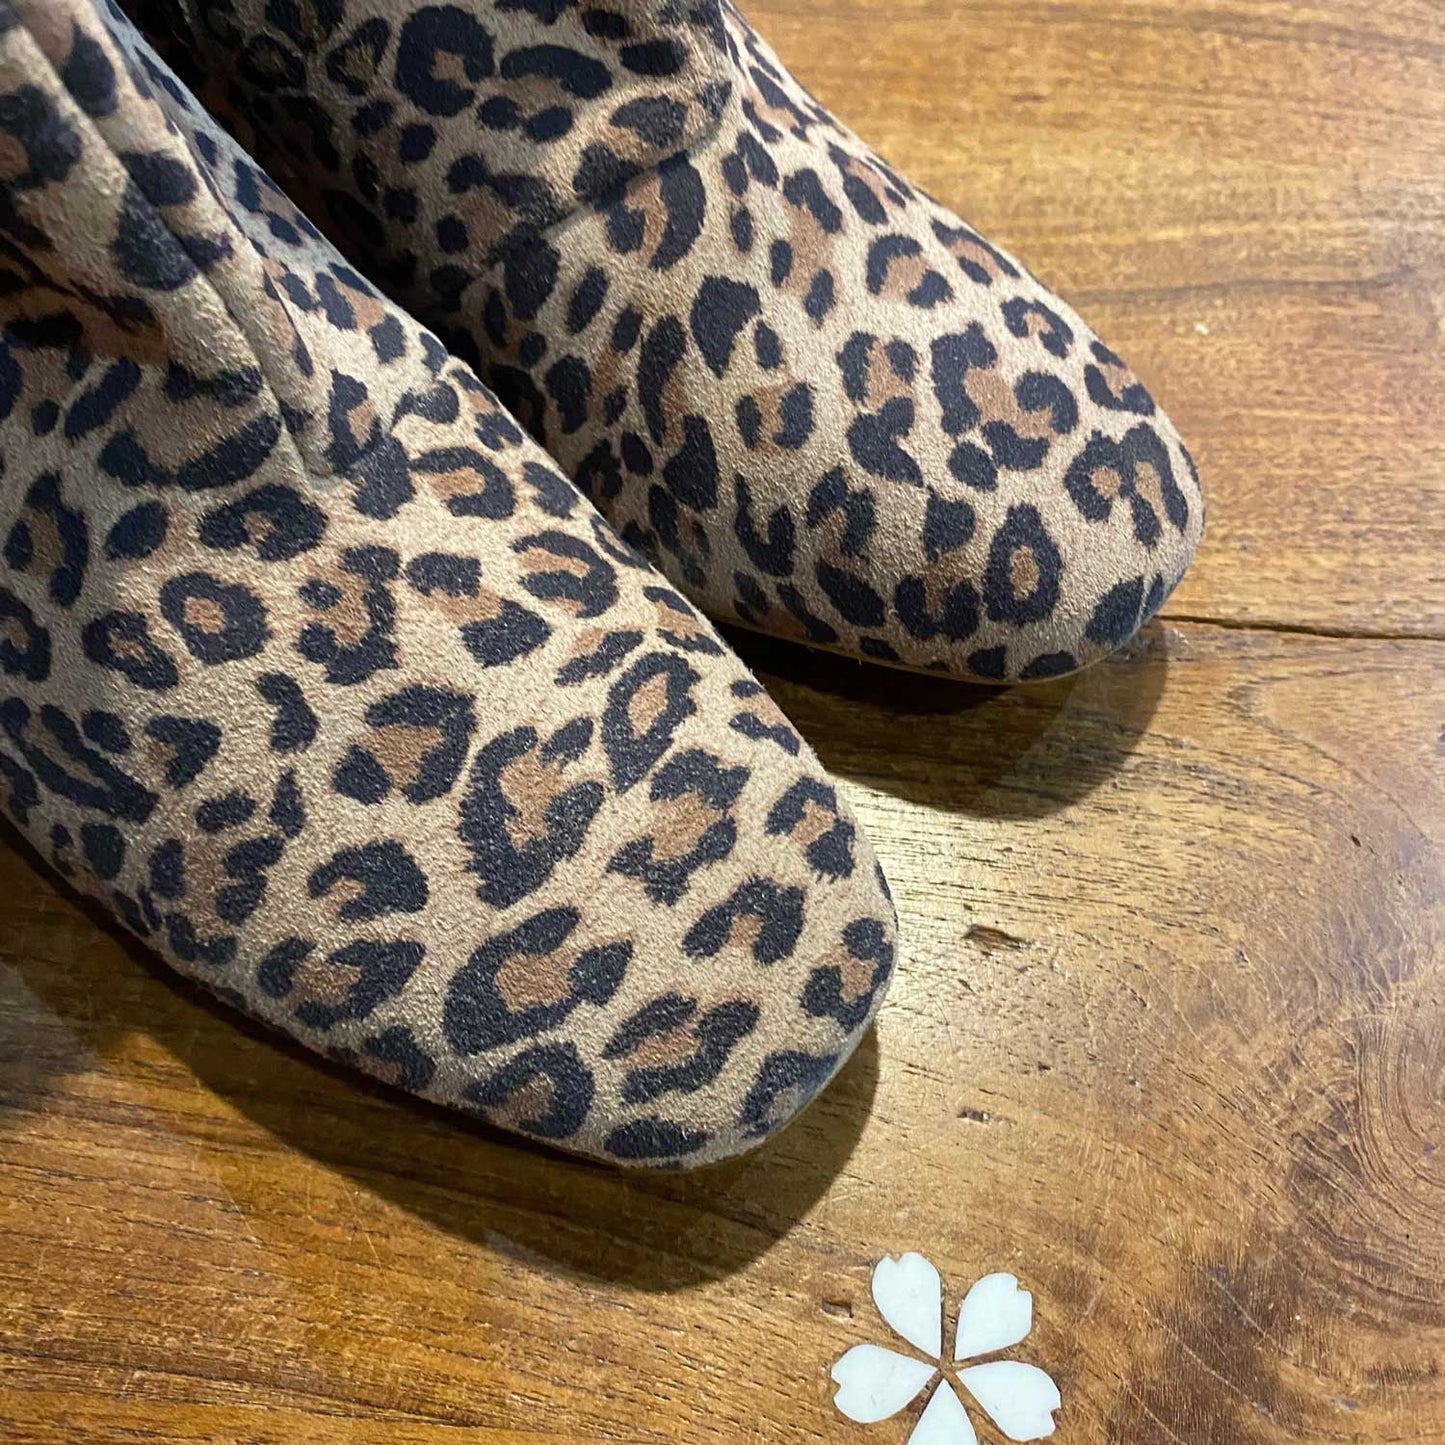 NIB free people nicola heeled leather leopard boot - size 40